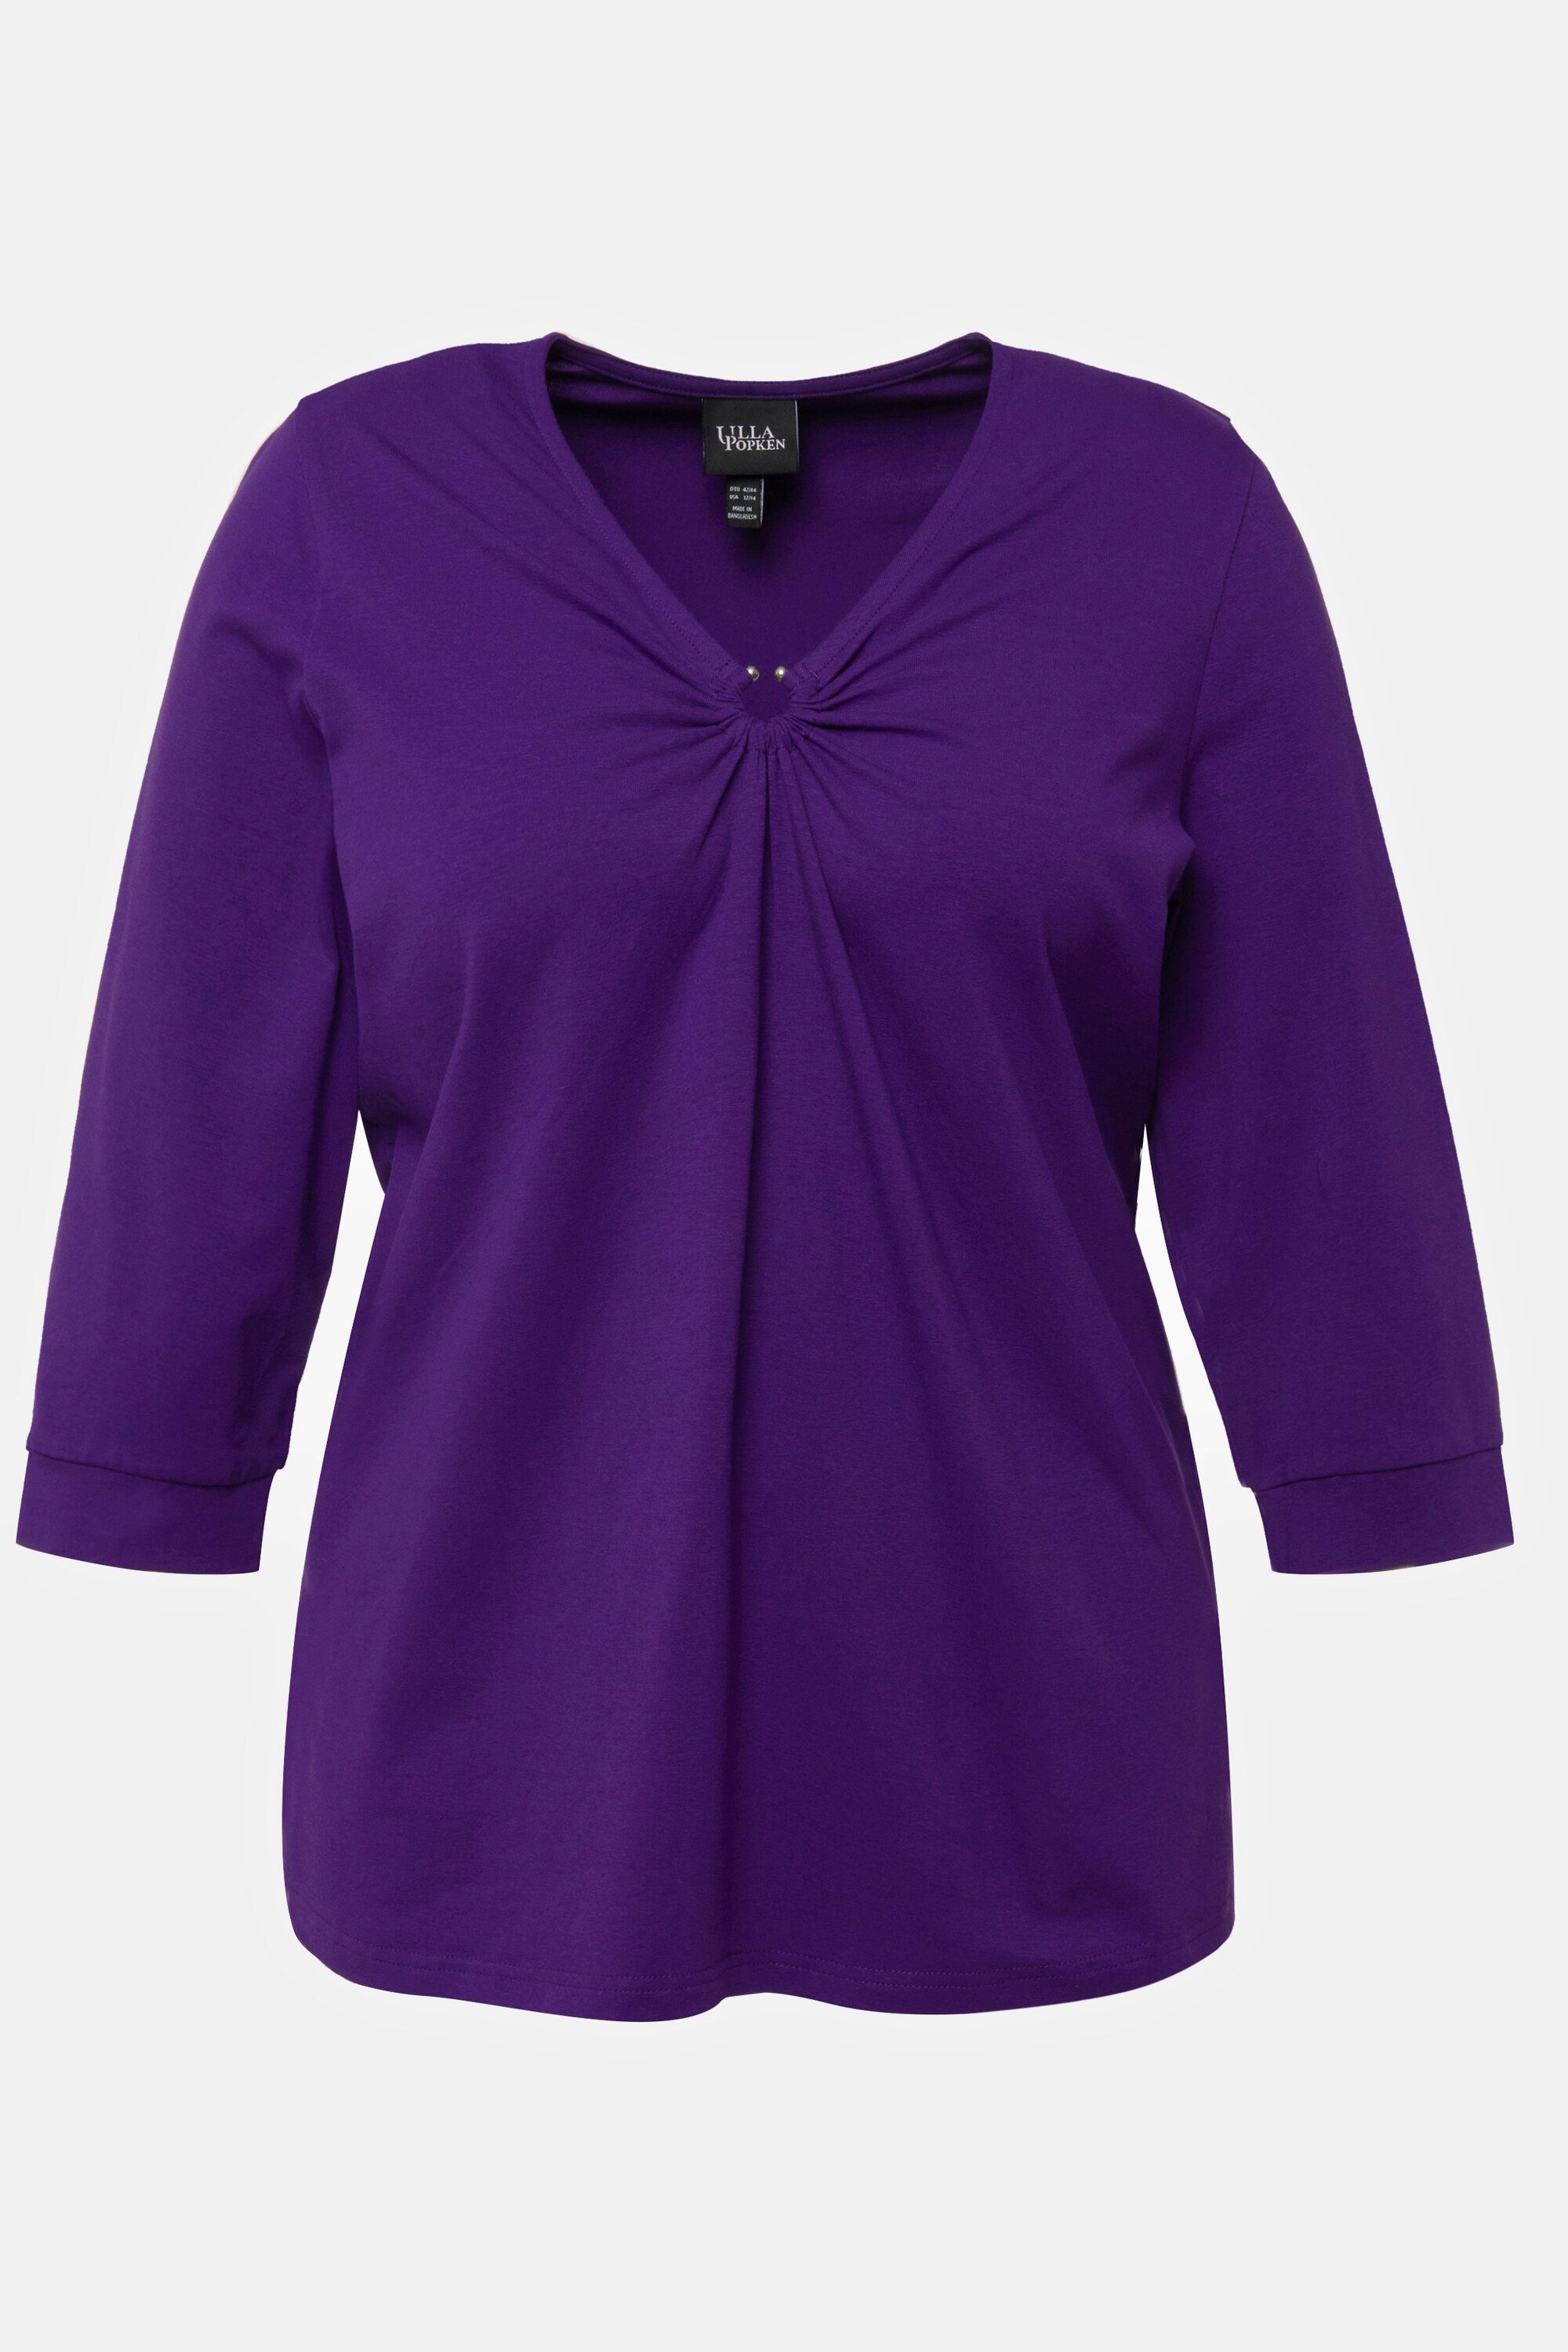 V-Ausschnitt tiefes Popken Zierring 3/4-Arm Shirt Ulla violett Classic Rundhalsshirt